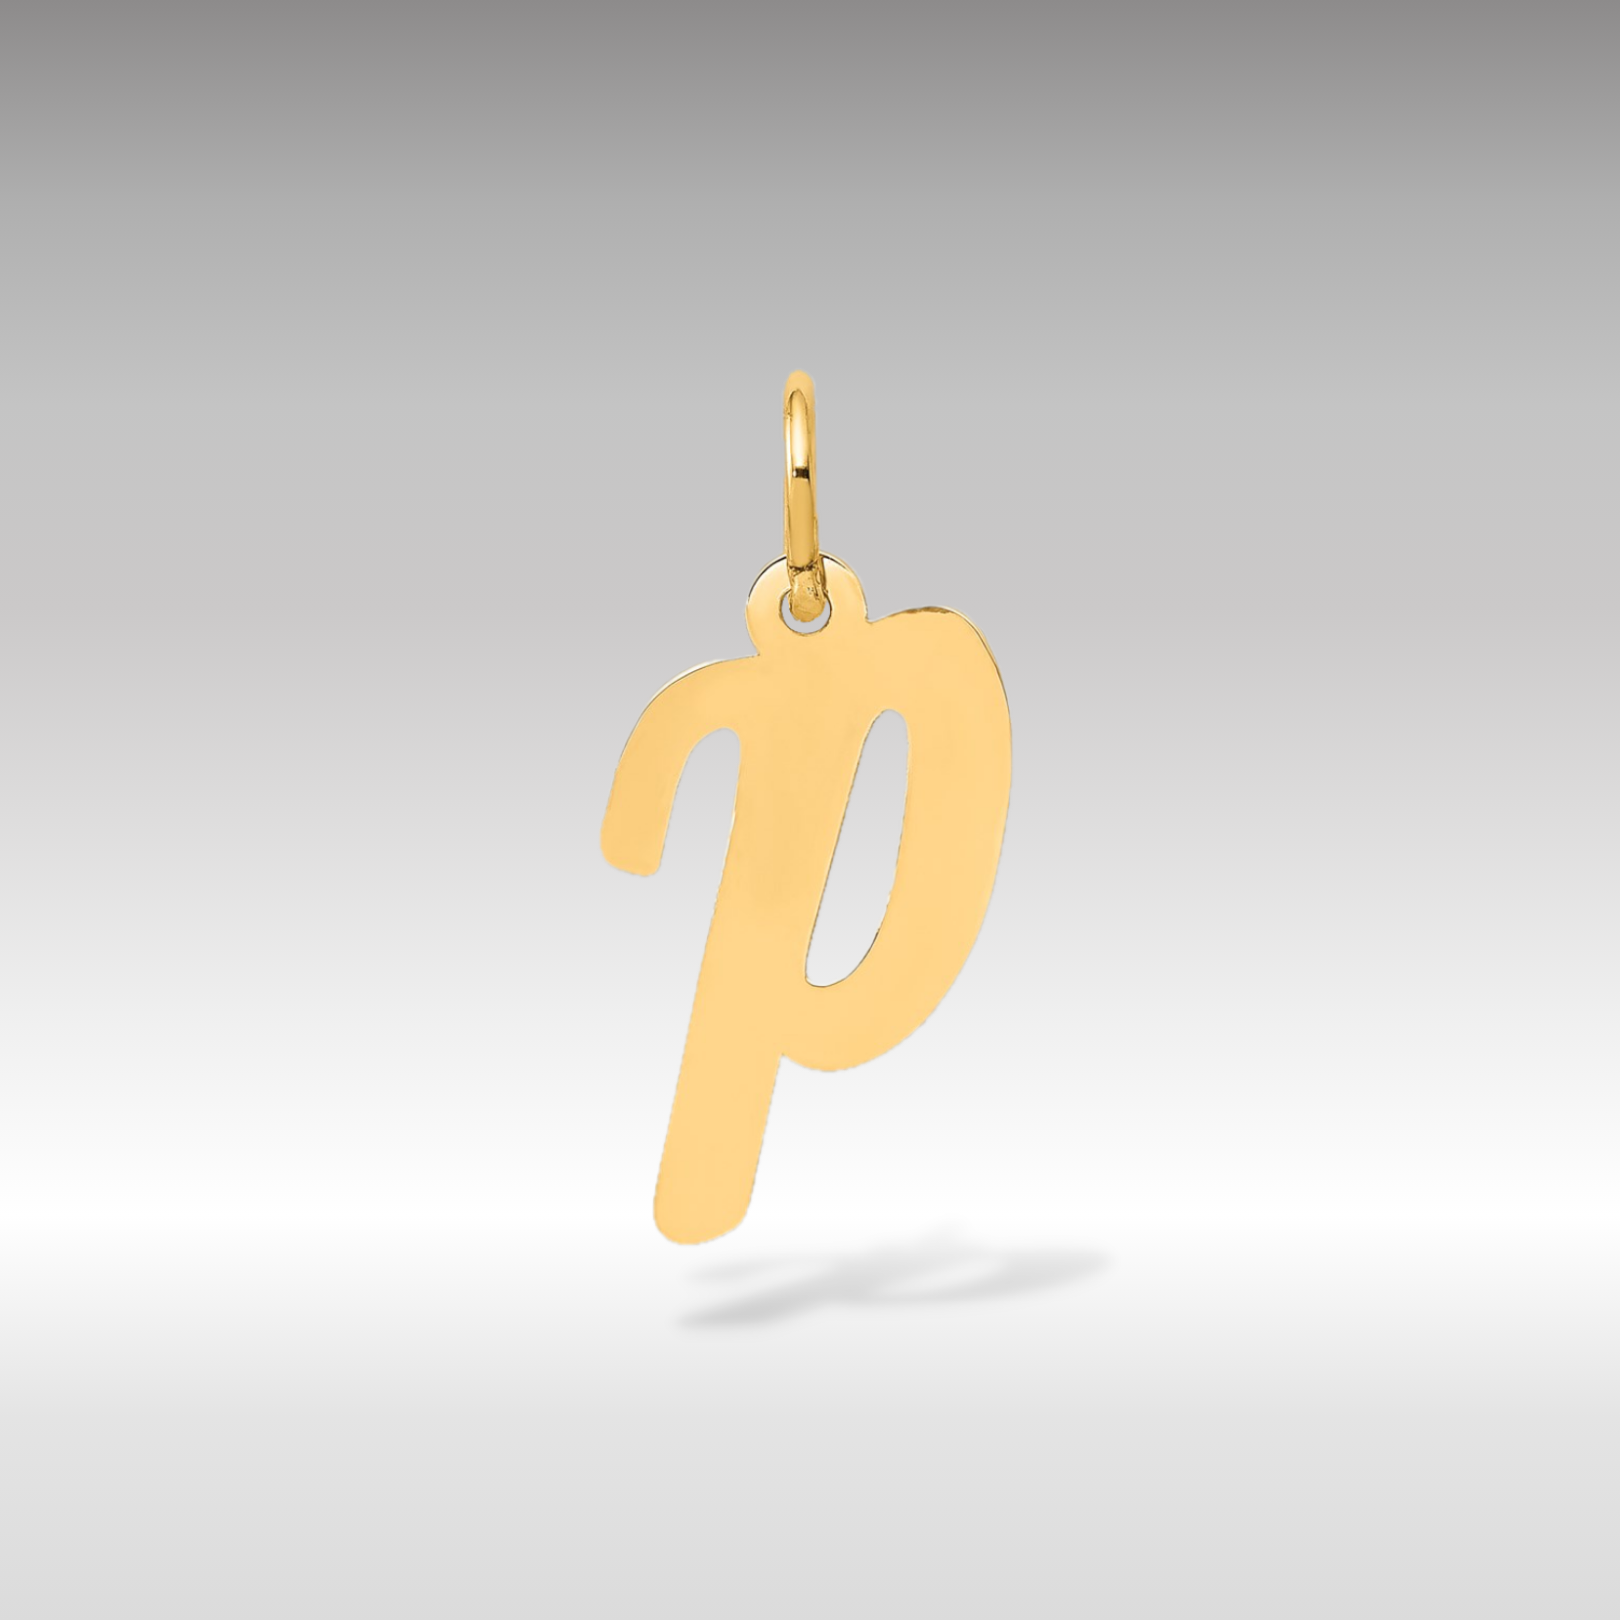 14K Gold Script Letter "P" Initial Pendant - Charlie & Co. Jewelry